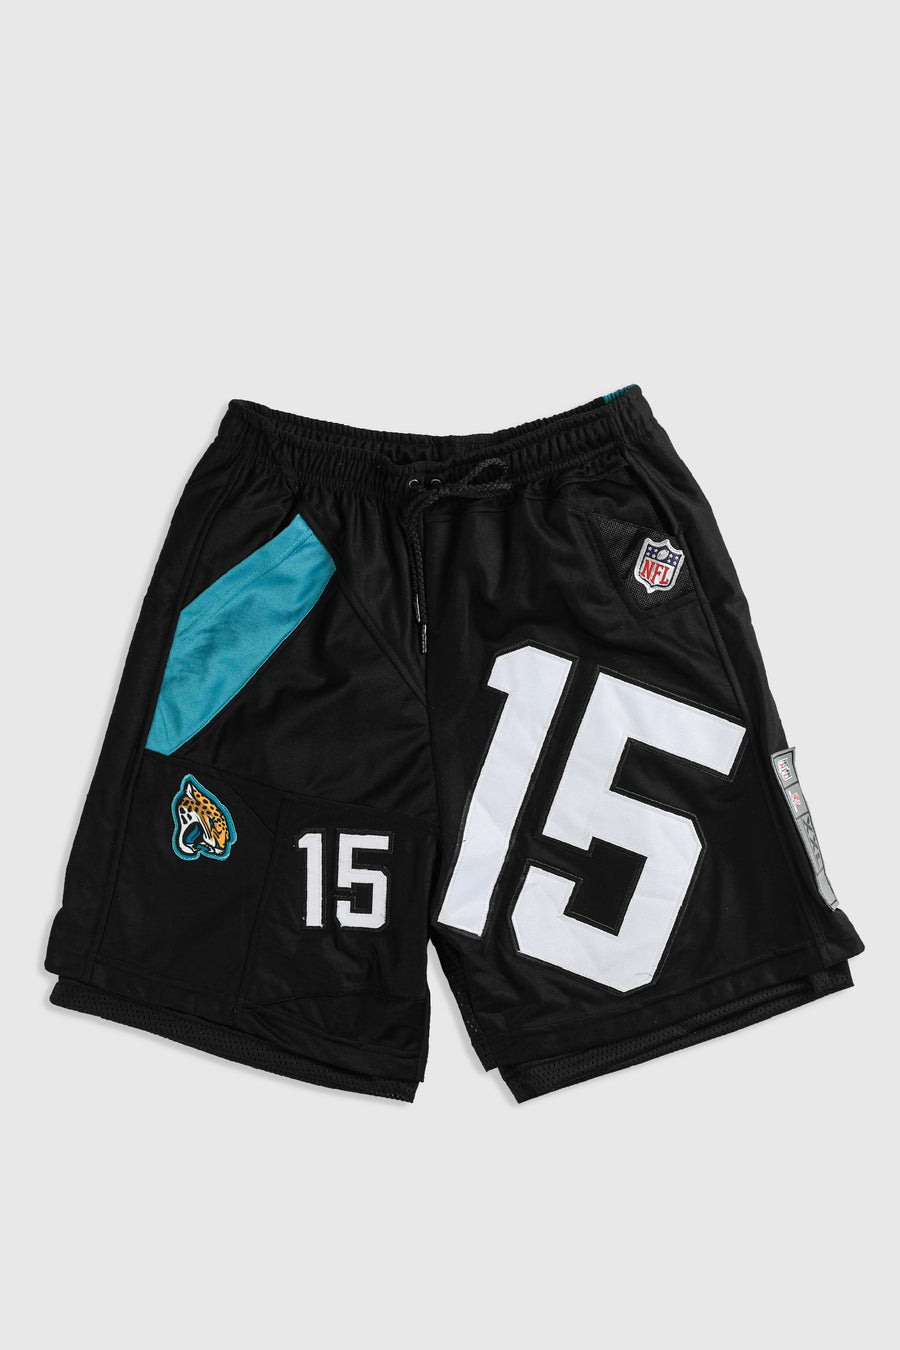 Unisex Rework Jaguars NFL Jersey Shorts - S